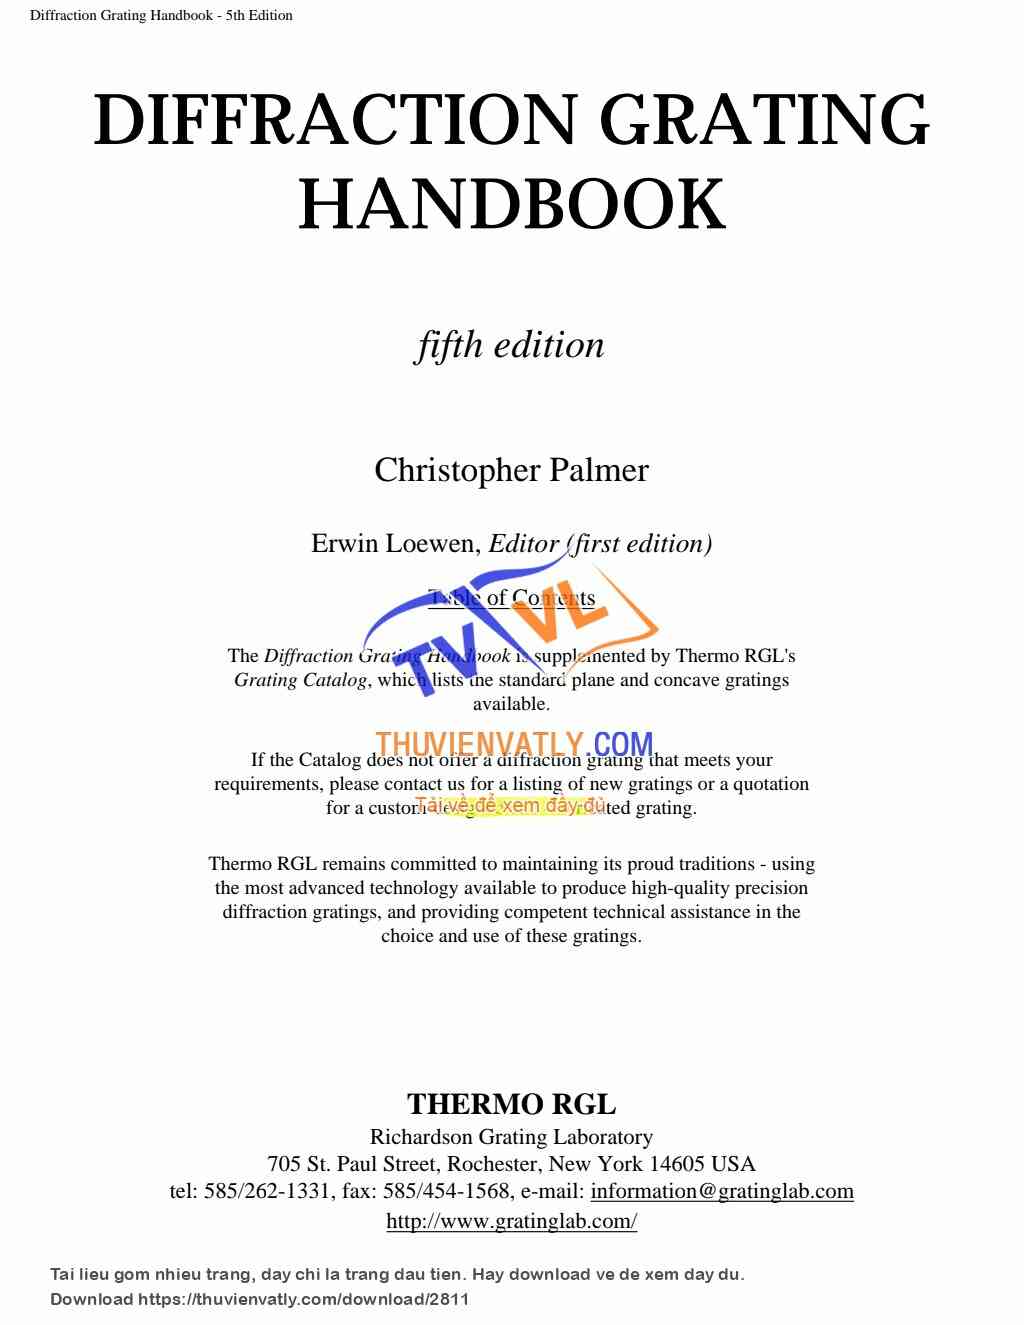 Diffraction Grating Handbook Christopher Palmer